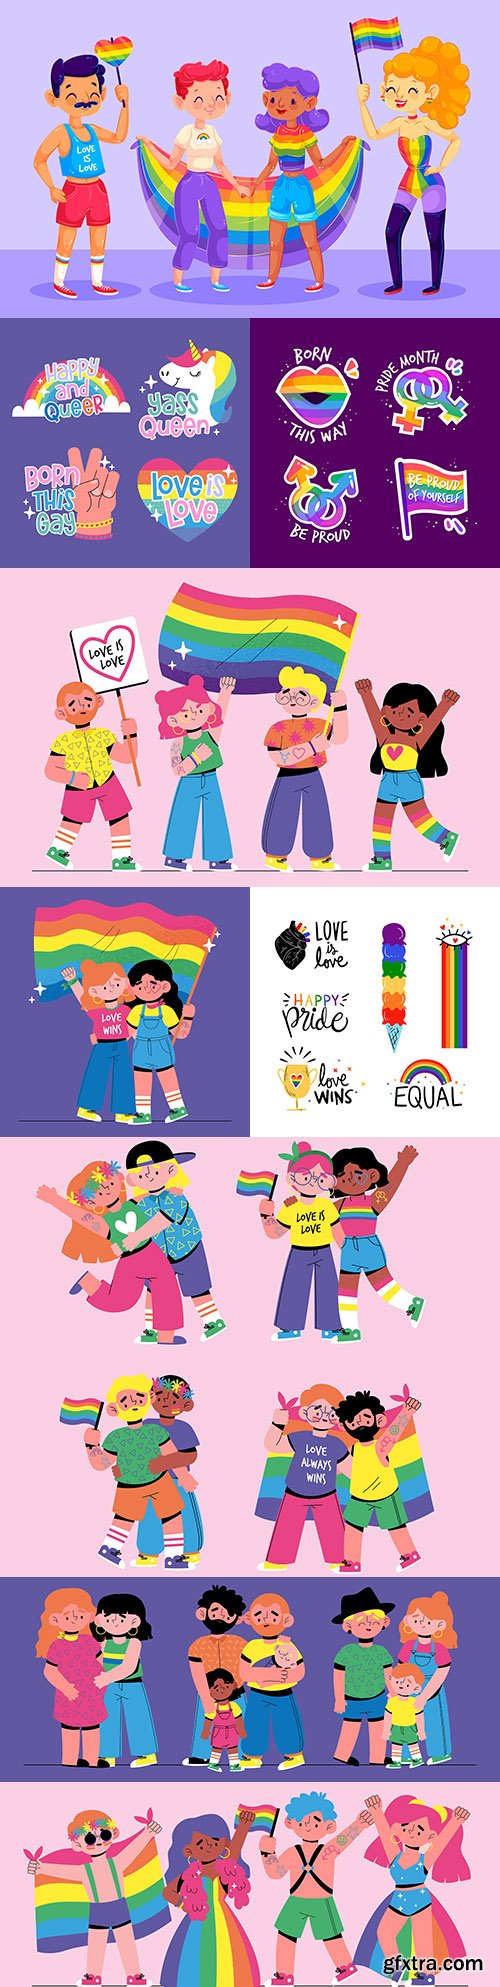 Pride day people celebrate together flat illustrations